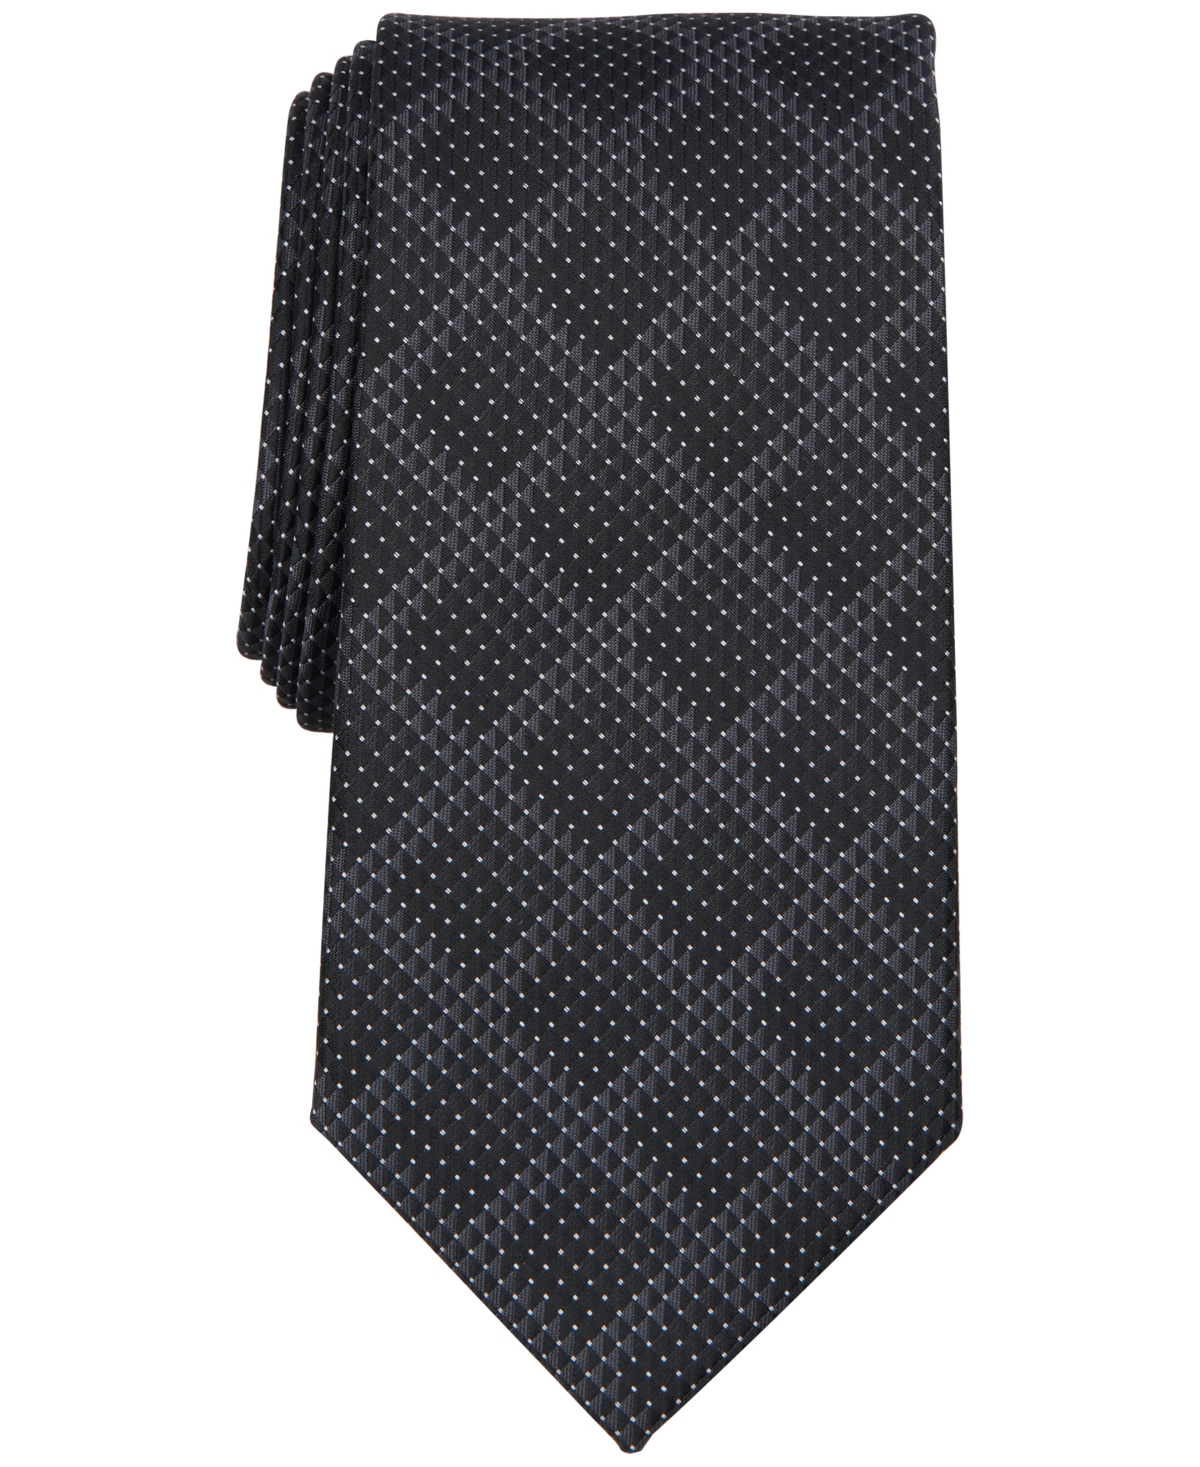 Men's Classic Geometric Grid Tie - Black